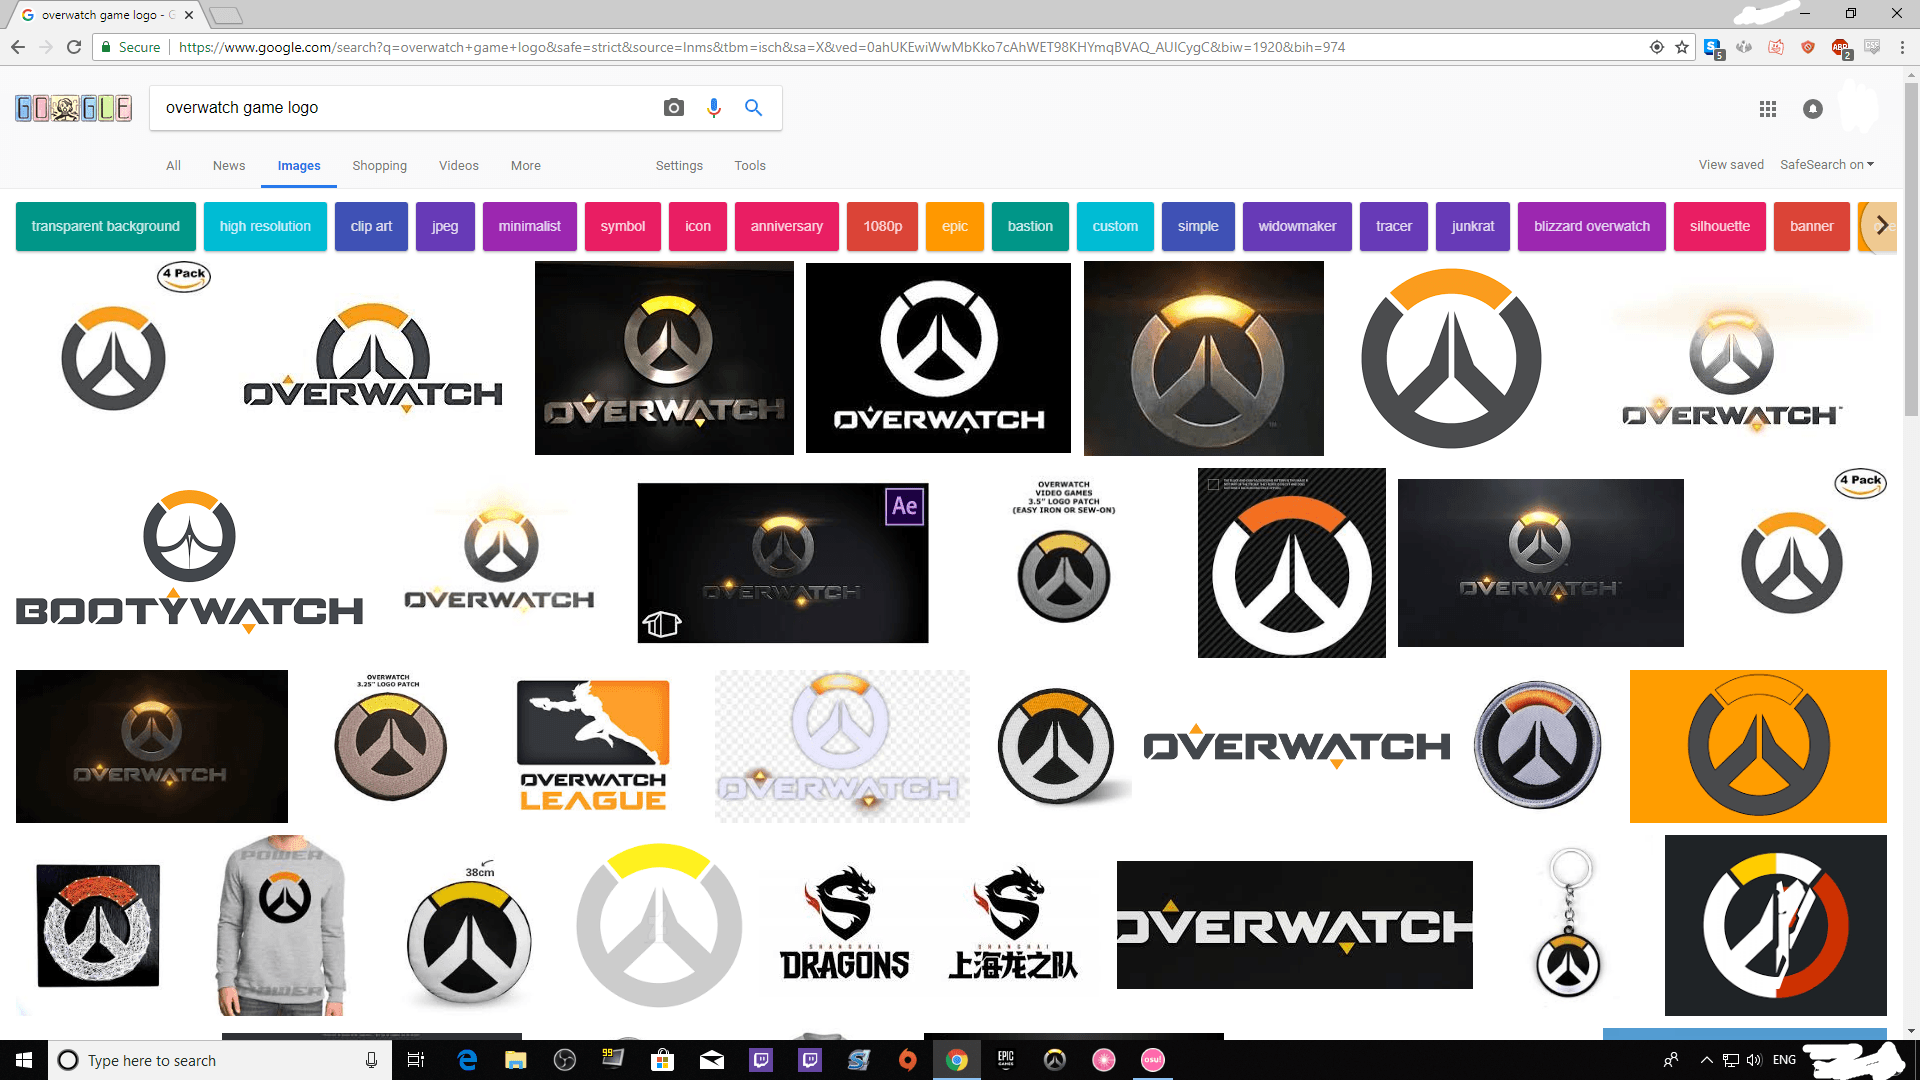 Lmao Logo - Blizzard got the Overwatch logo from google lmao : OverwatchCirclejerk